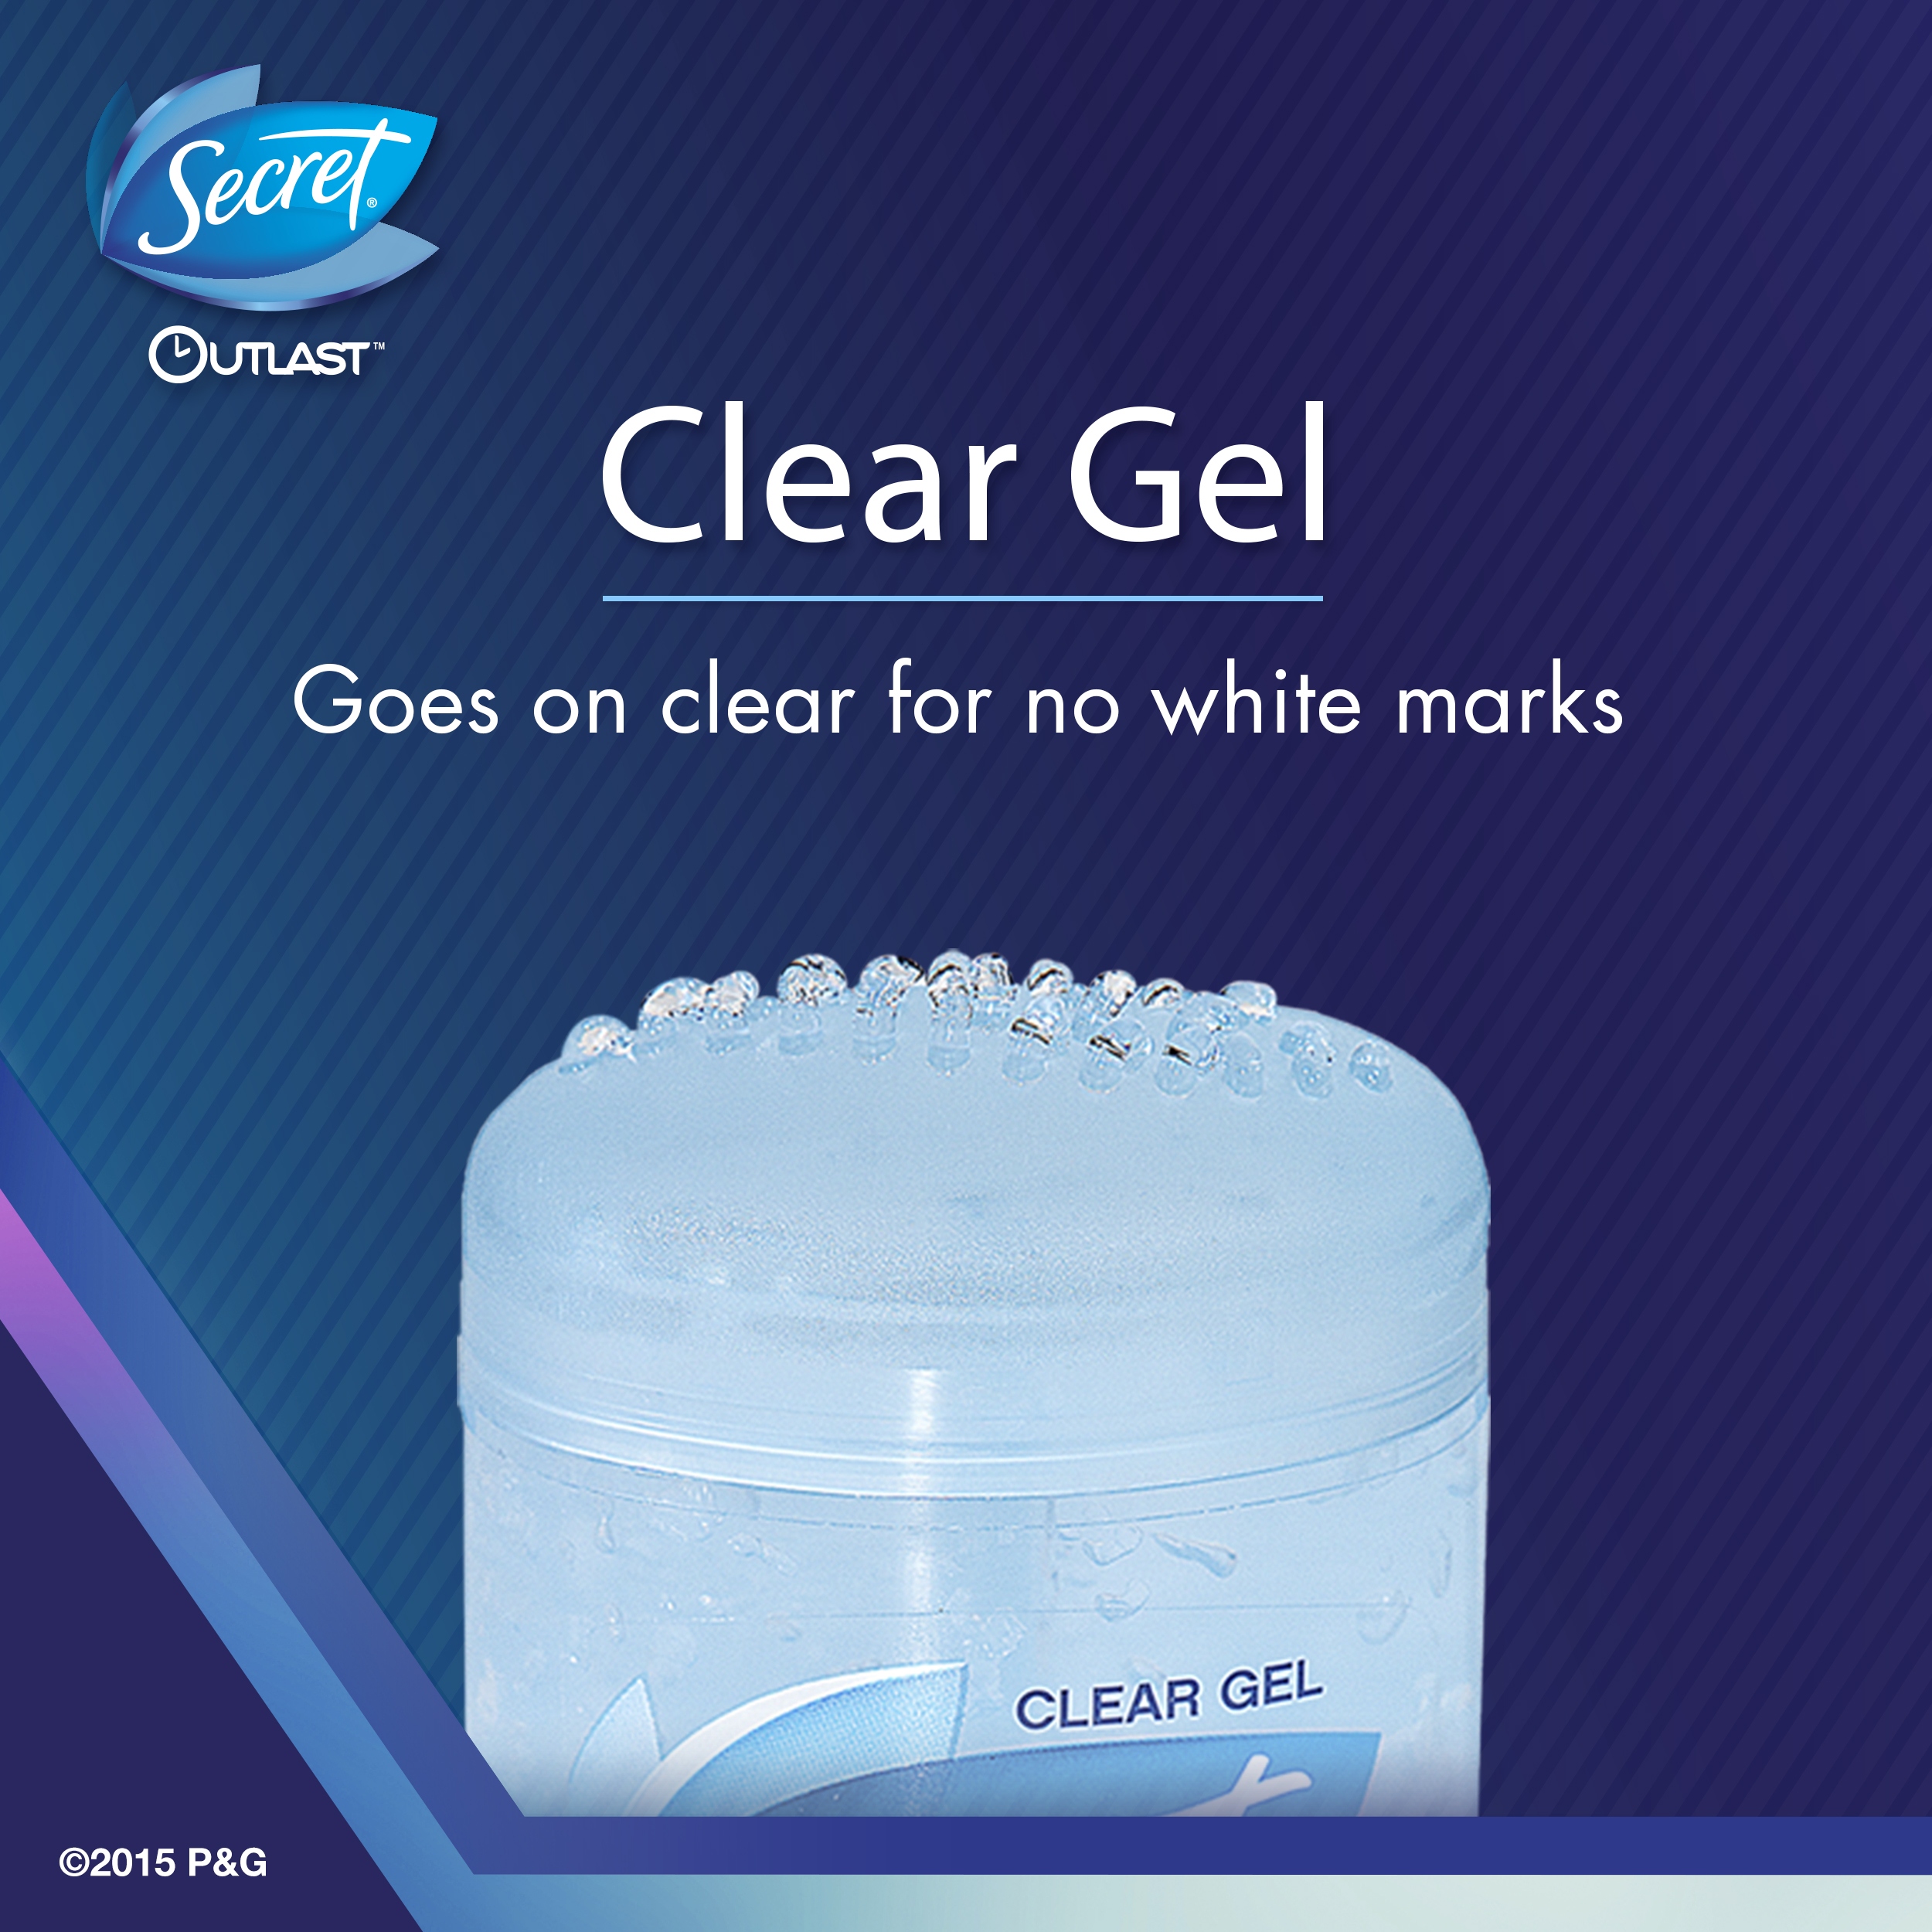 Secret Outlast Clear Gel Antiperspirant Deodorant for Women Sensitive Clean 2.6 oz - image 5 of 13